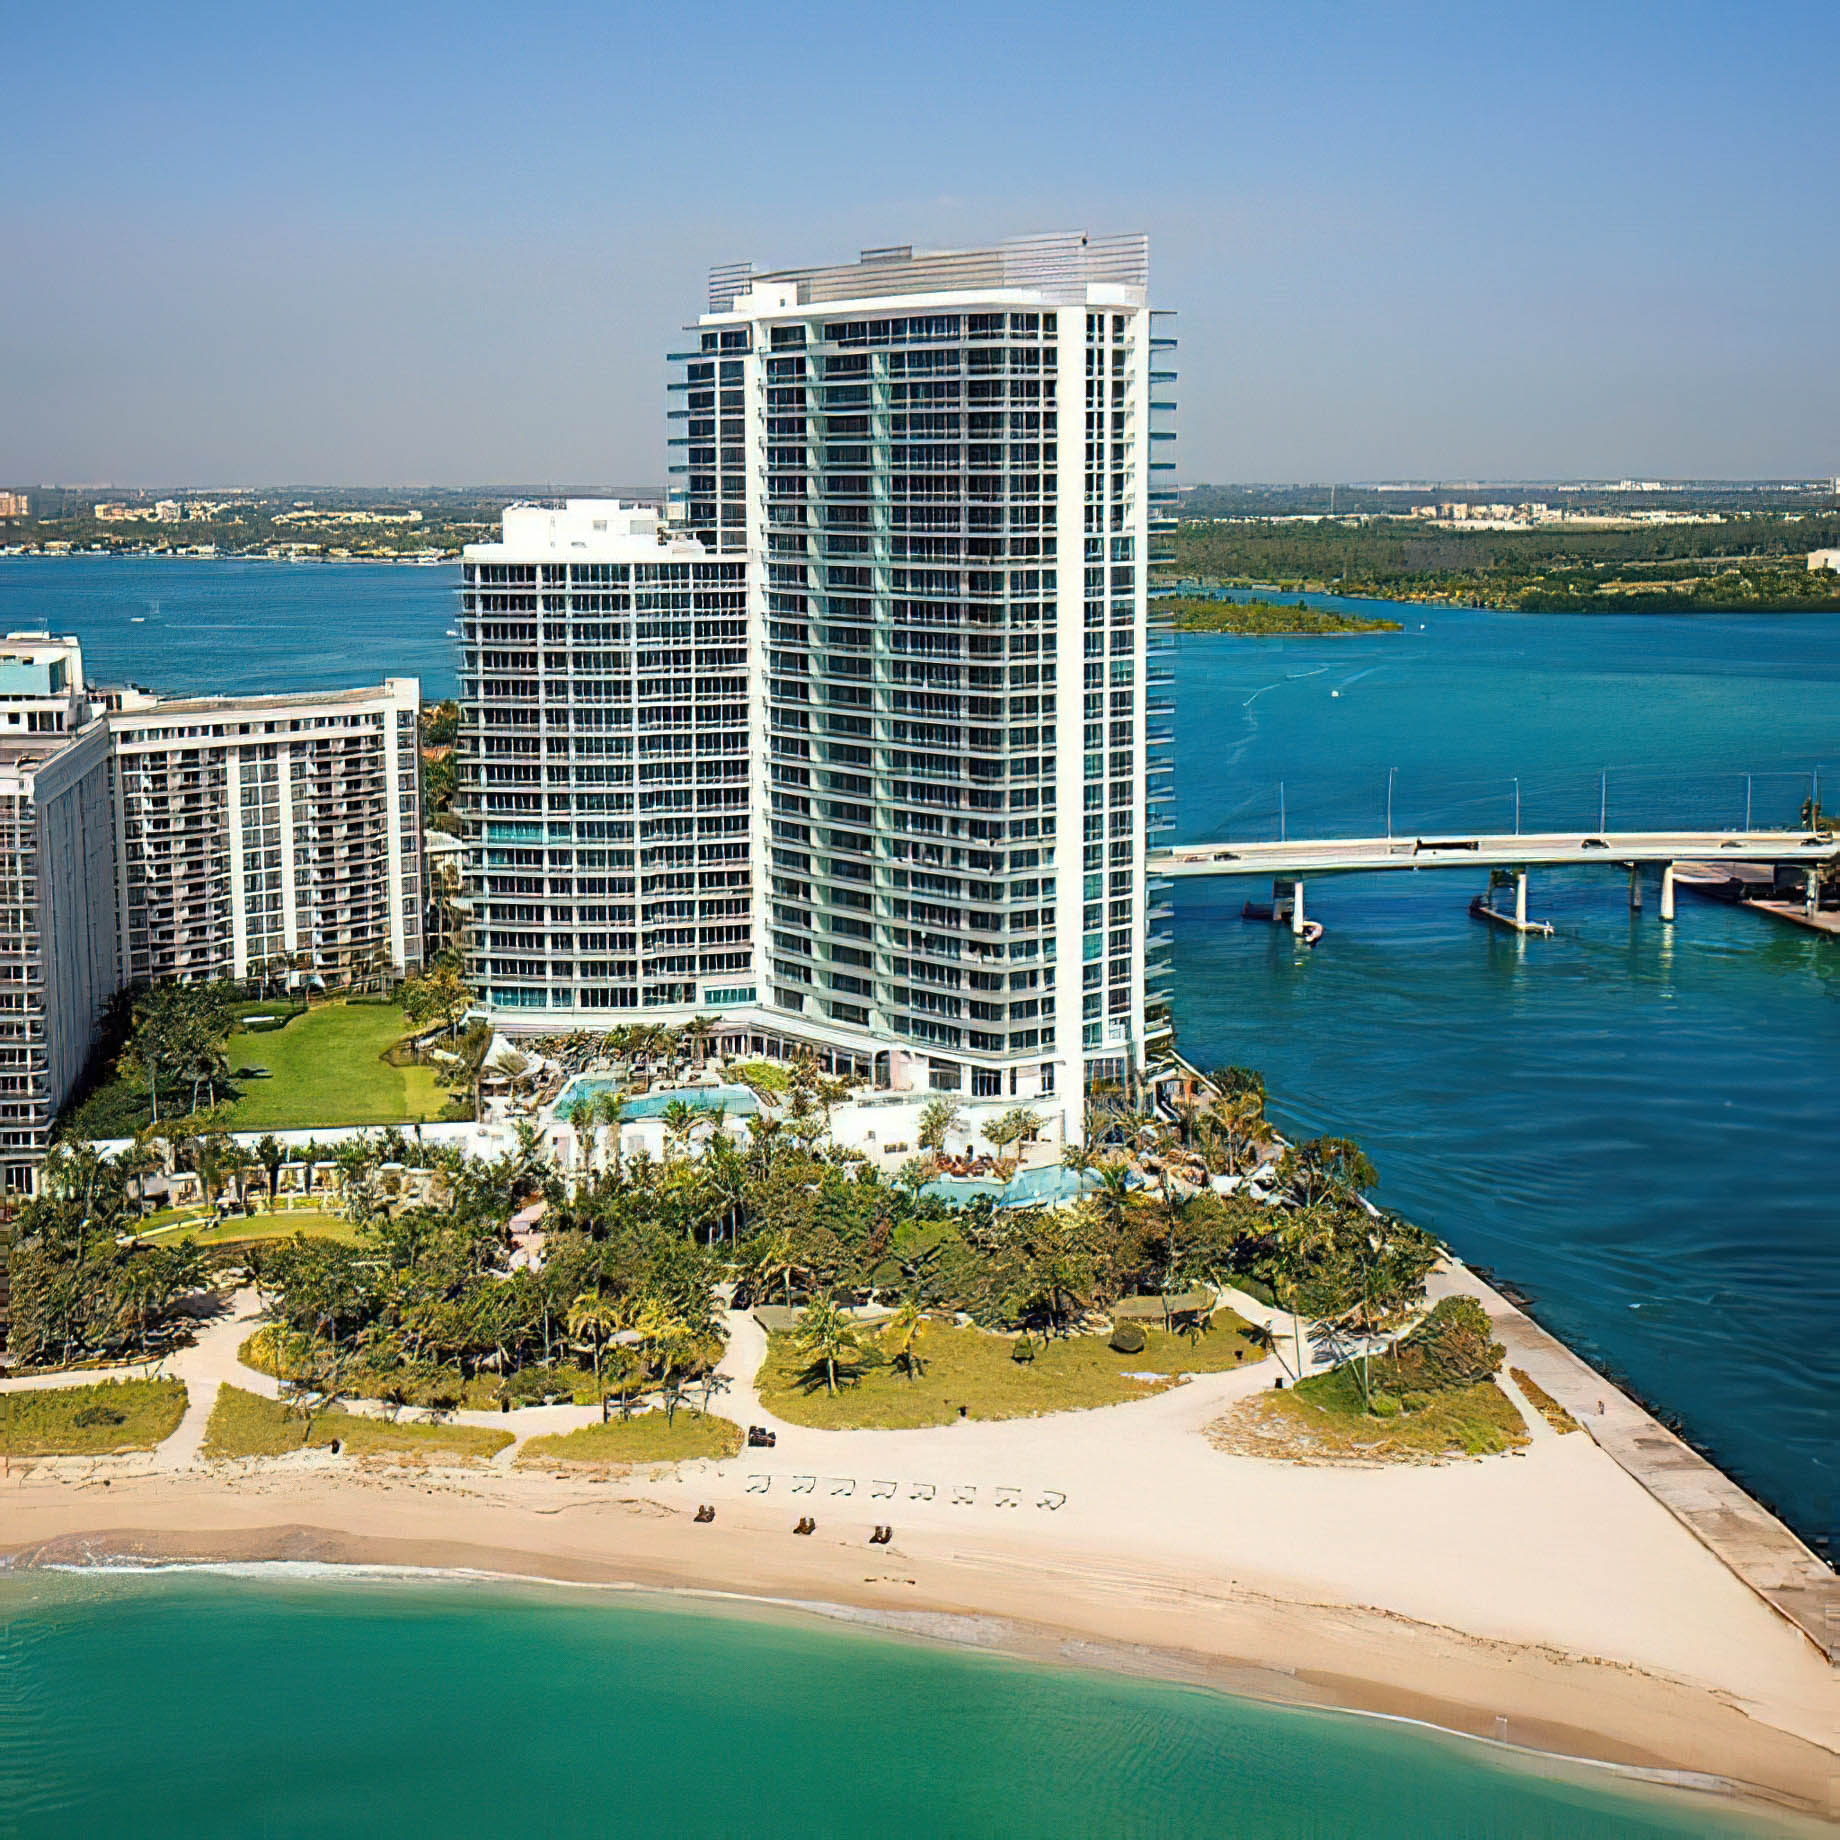 The Ritz-Carlton Bal Harbour, Miami Resort - Bal Harbour, FL, USA - Exterior Aerial Beach View